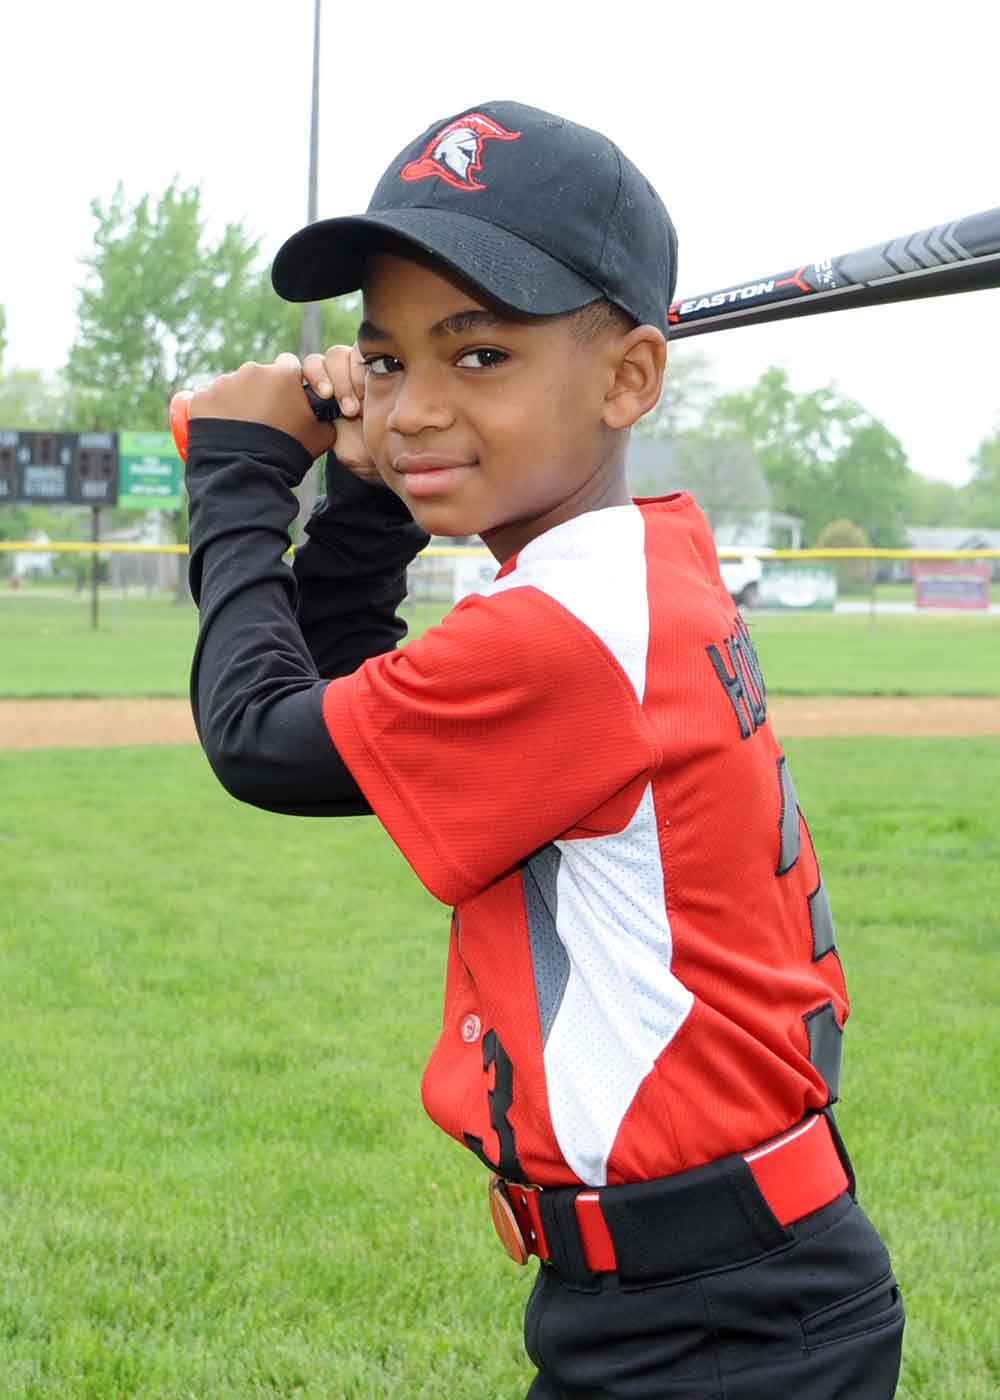 boy baseball player posing with bat